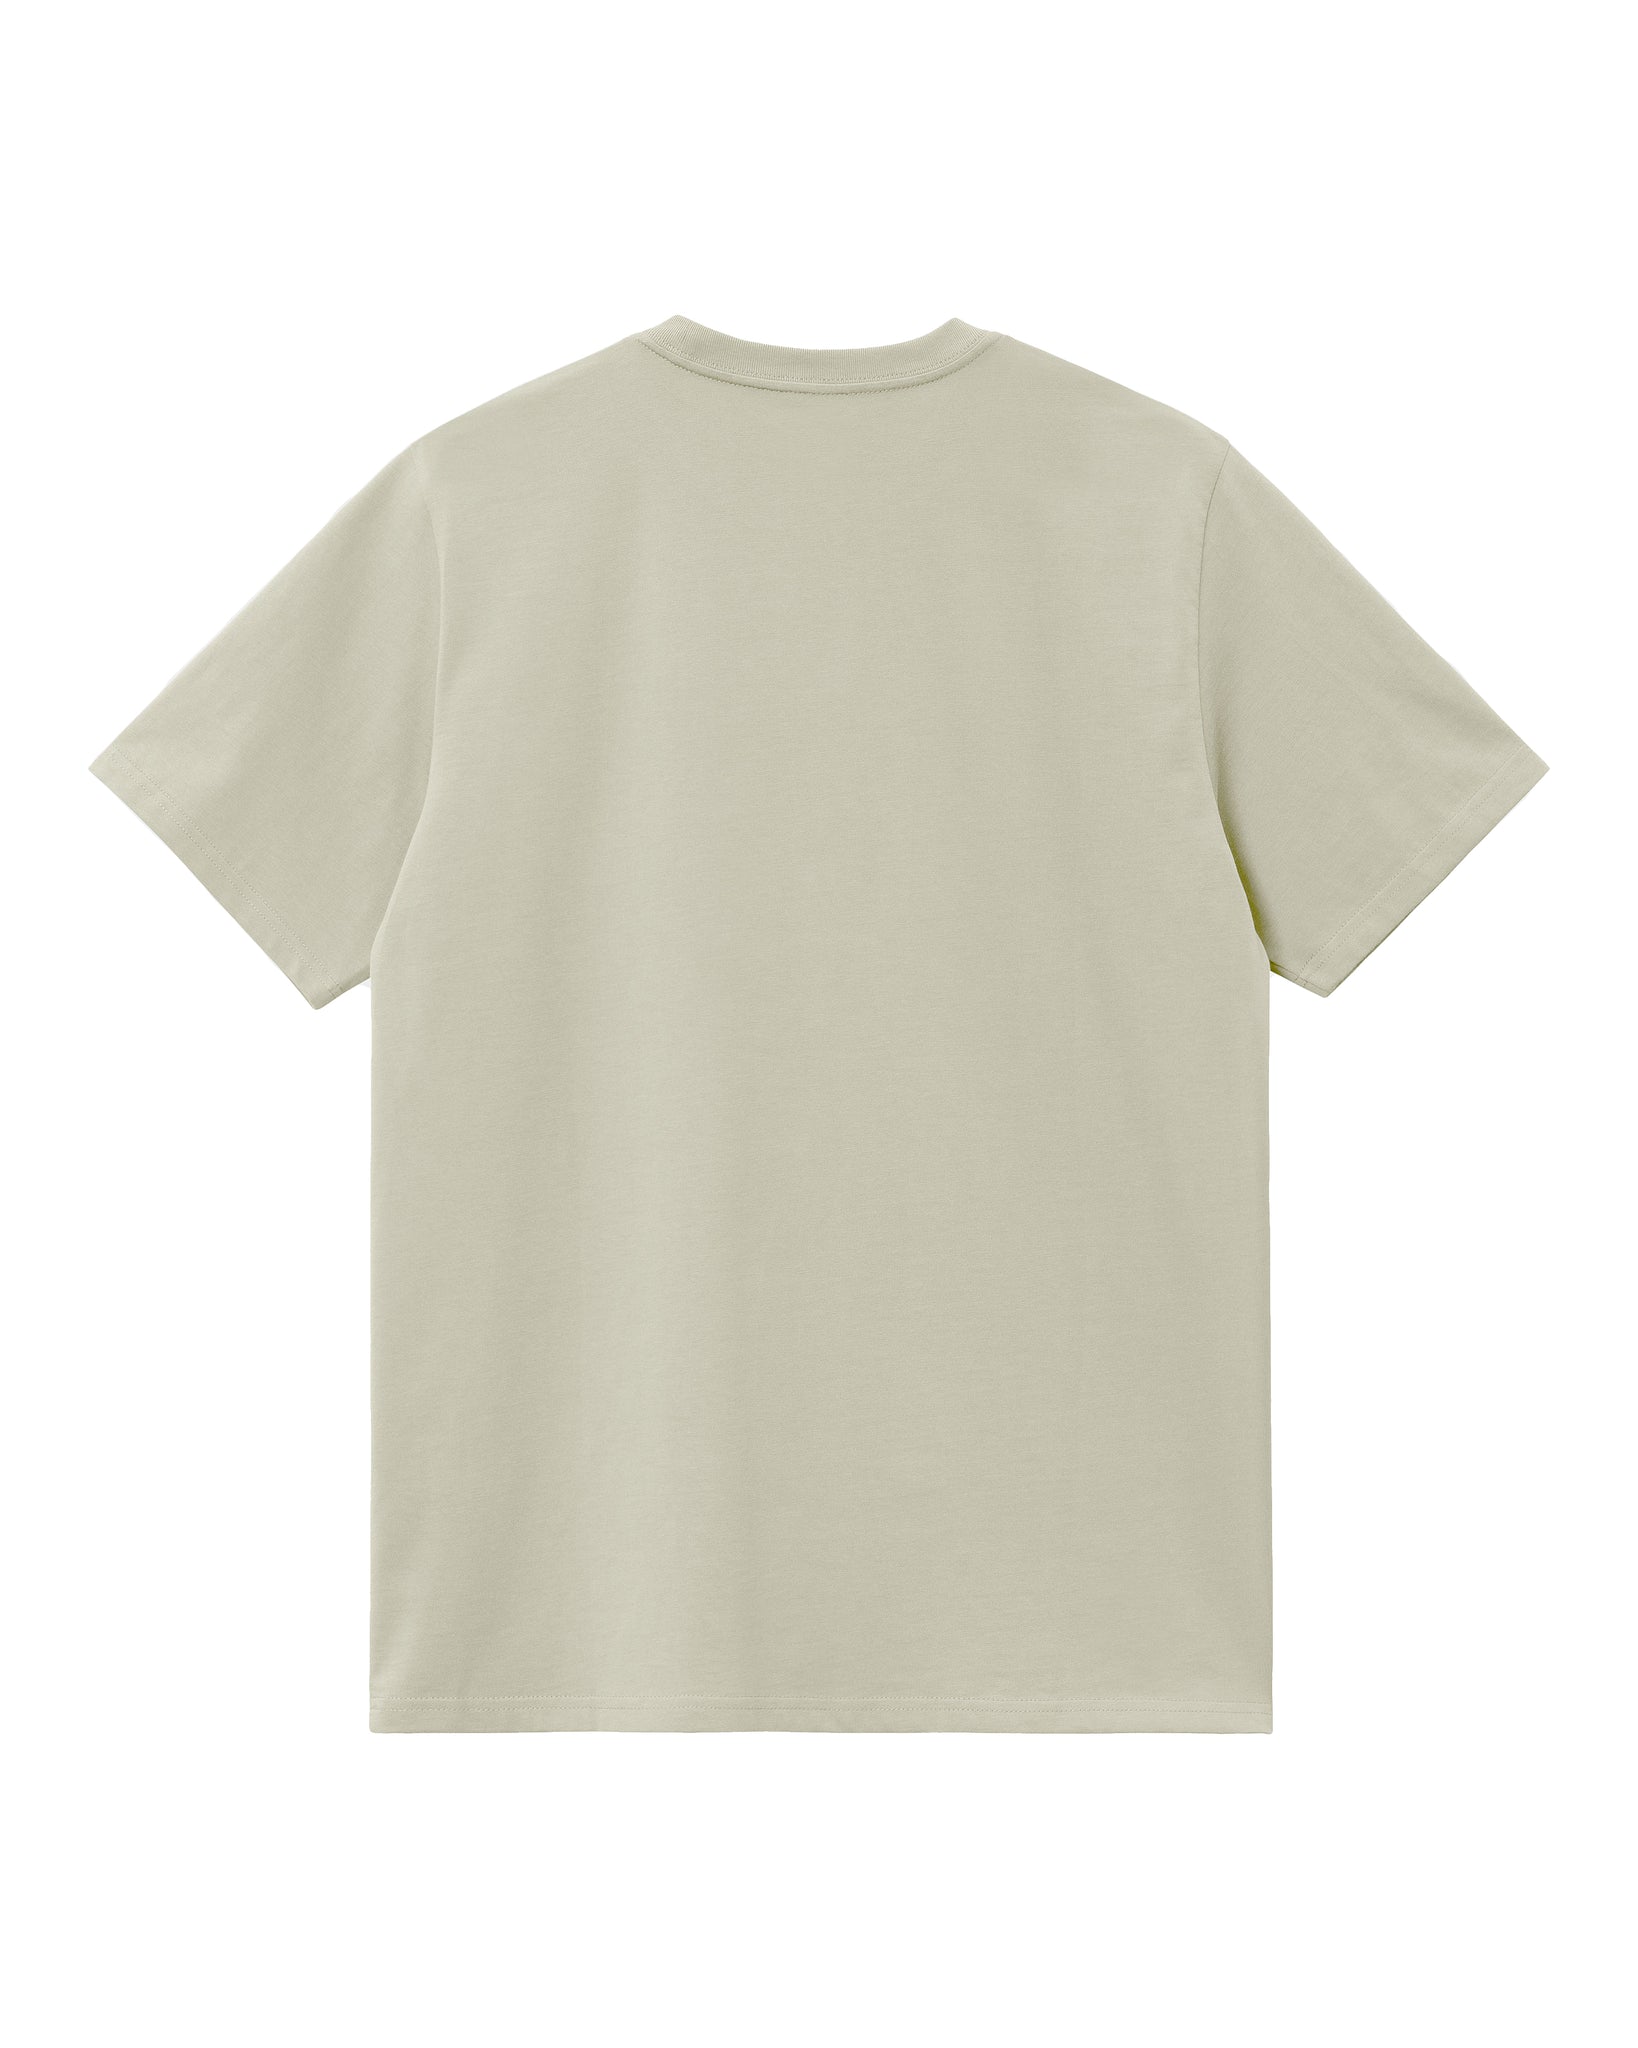 SS Madison Shirt - Beryl/White